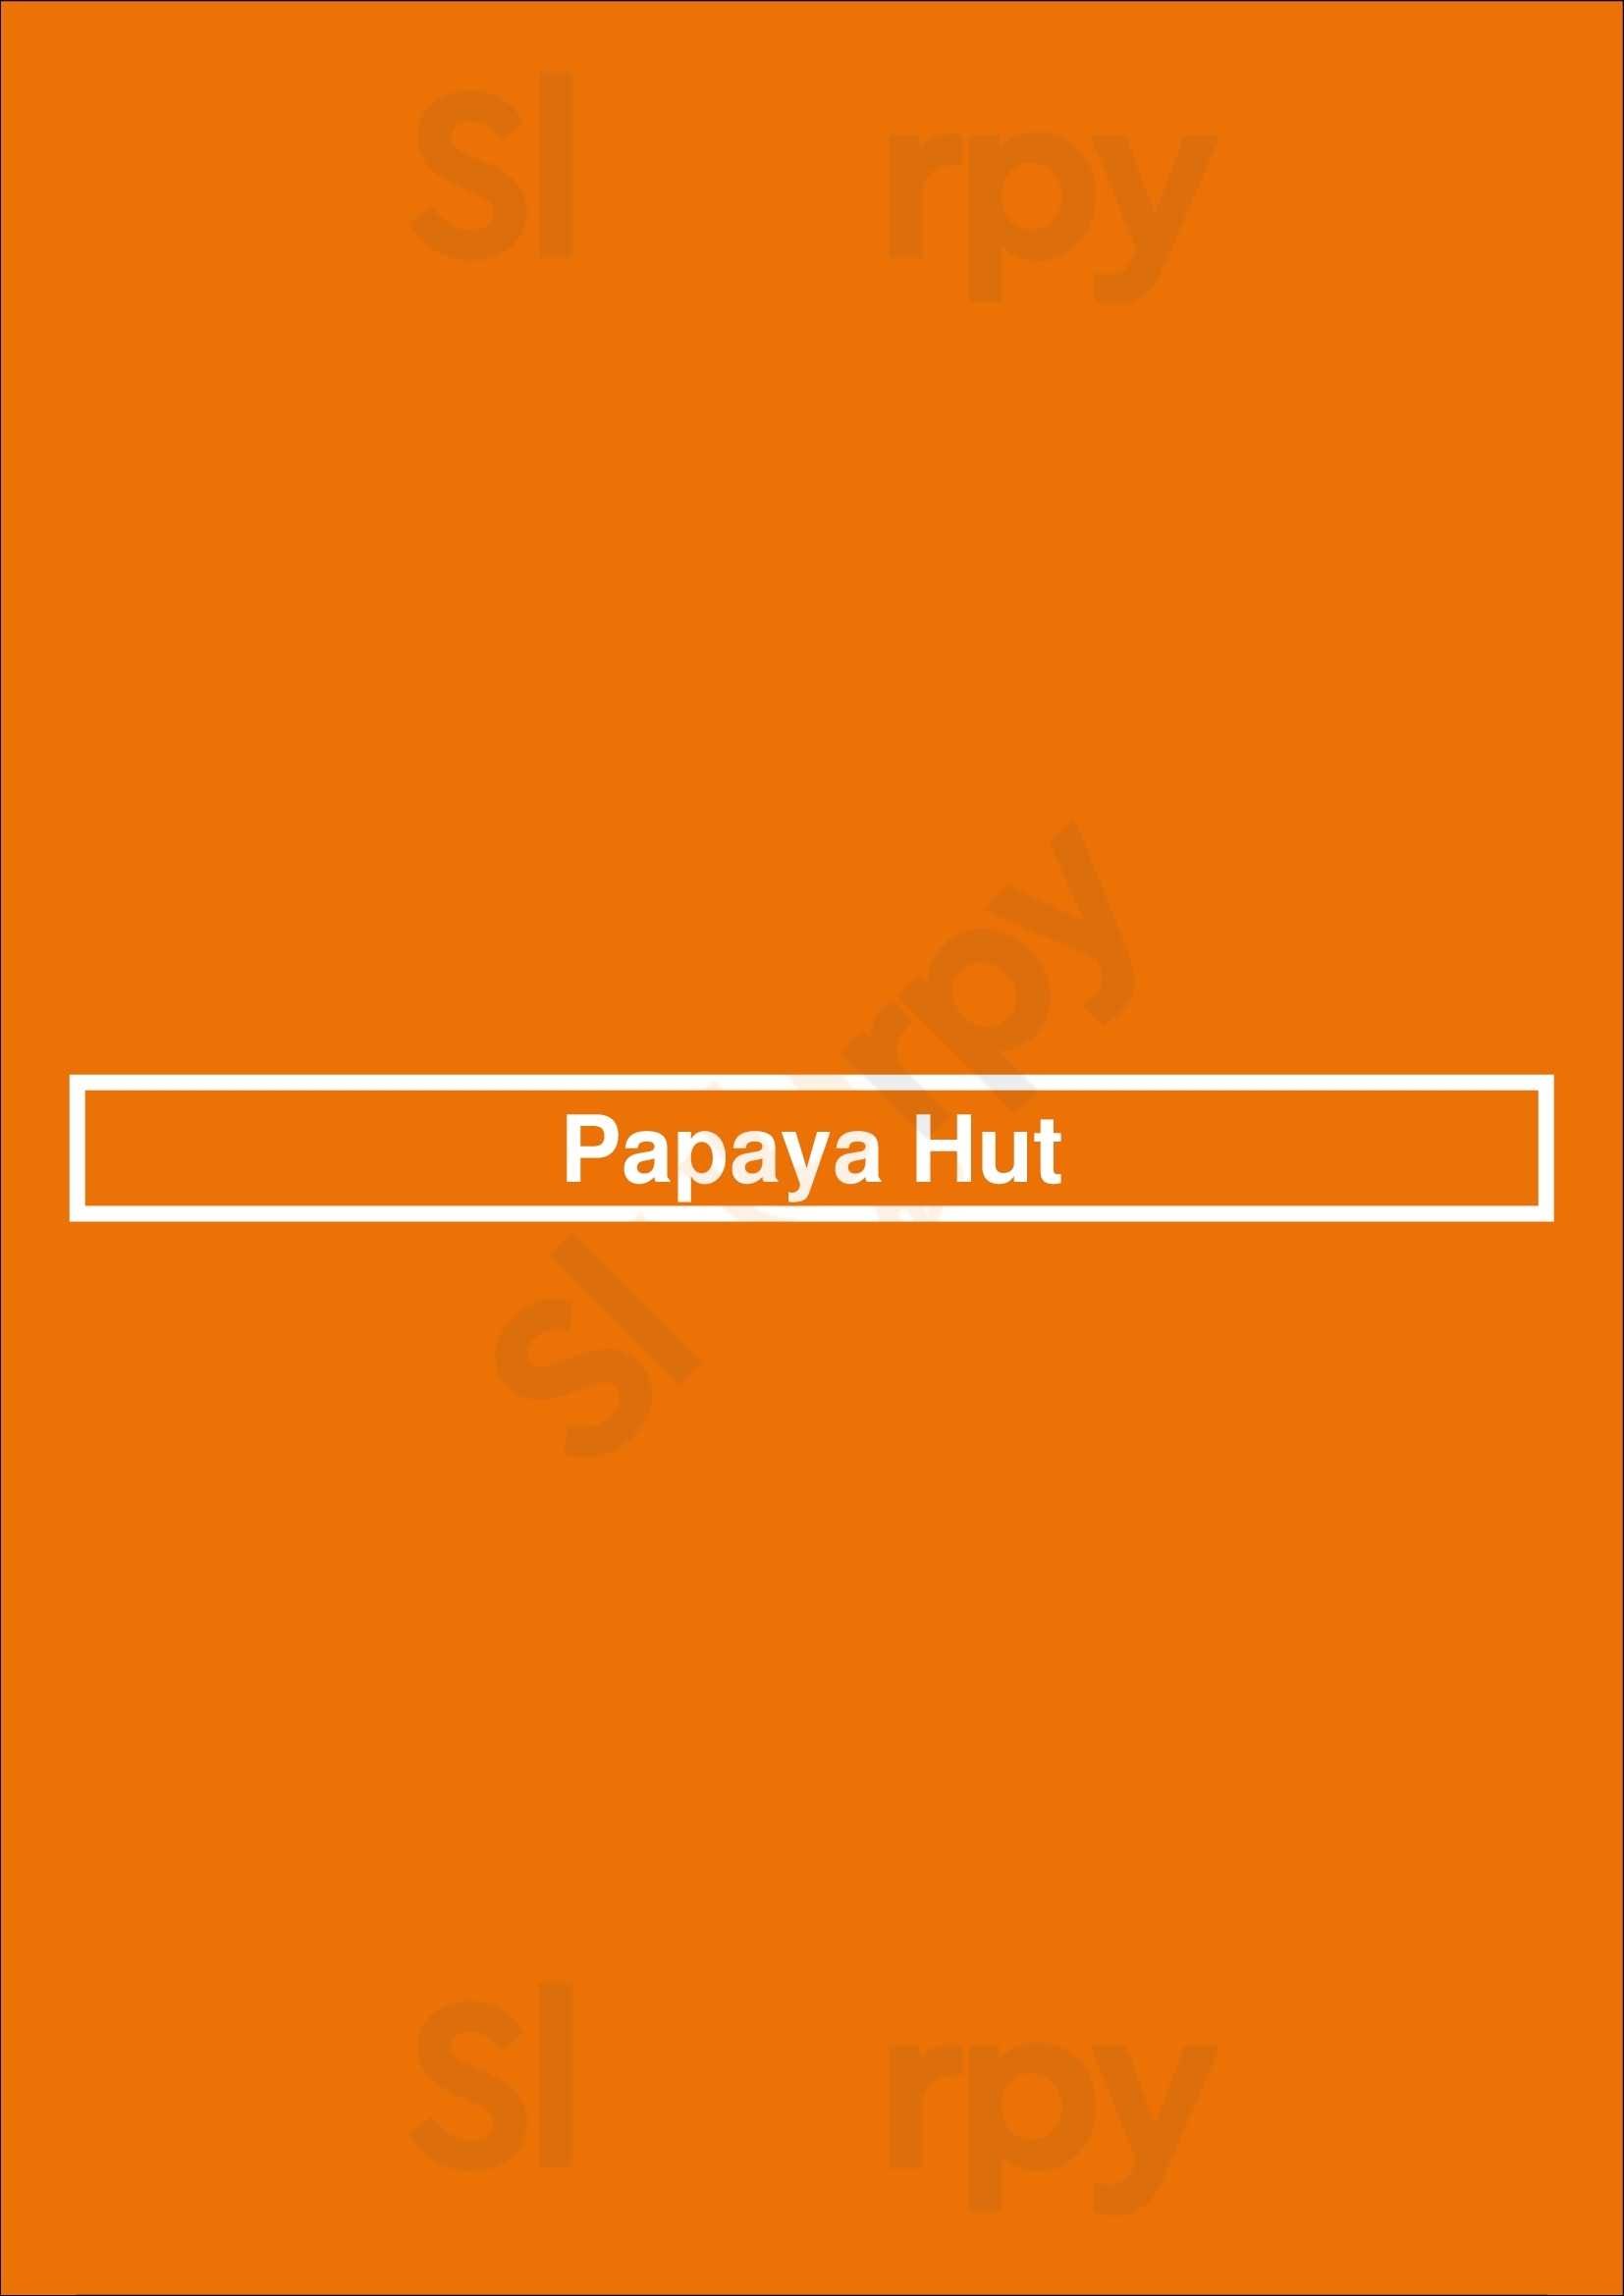 Papaya Hut Vancouver Menu - 1